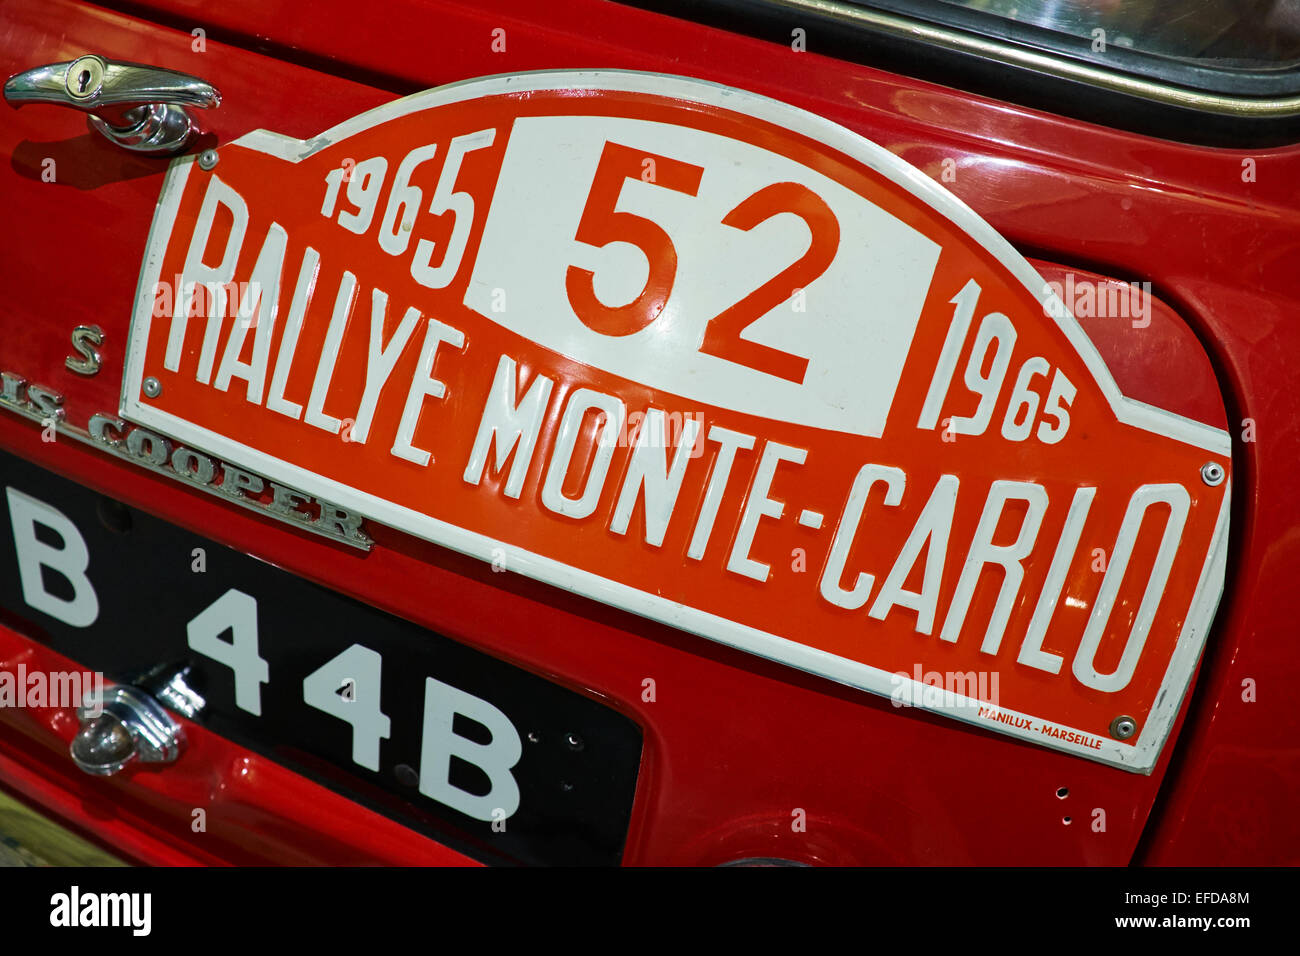 1964 Morris Mini Cooper S Which Won The 1965 Monte Carlo Rally Heritage Motor Centre Gaydon Warwickshire UK Stock Photo